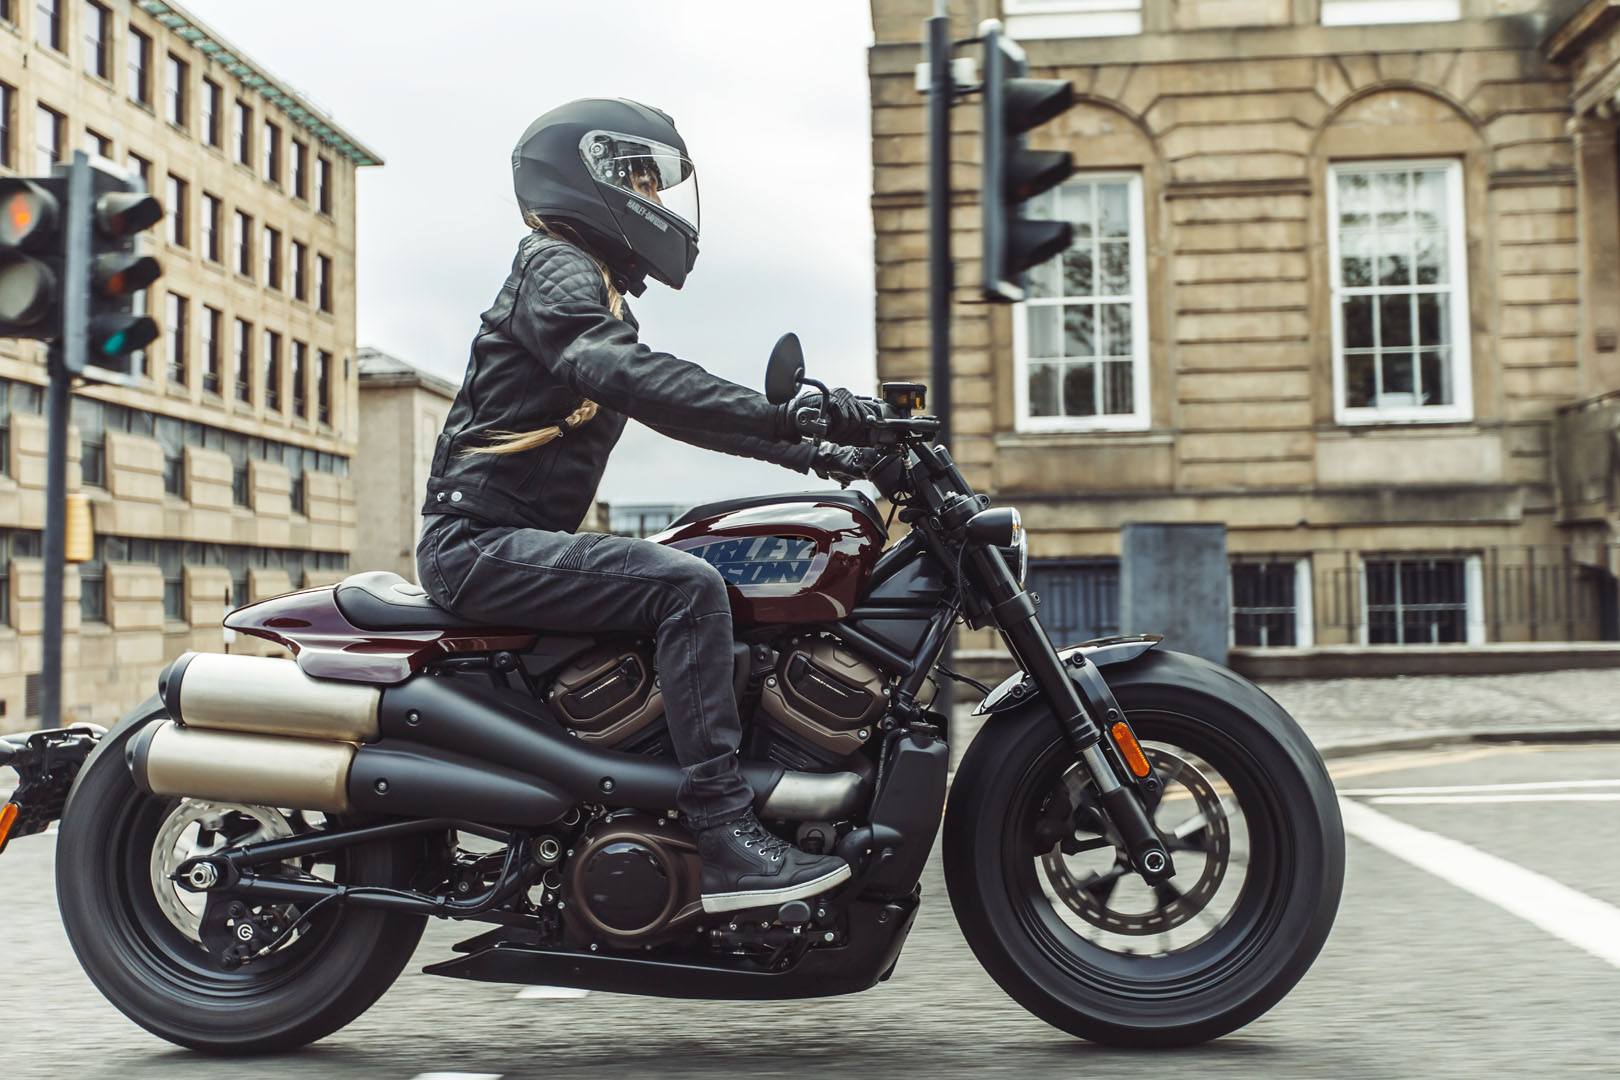 2021 Harley-Davidson Sportster® S in Washington, Utah - Photo 17